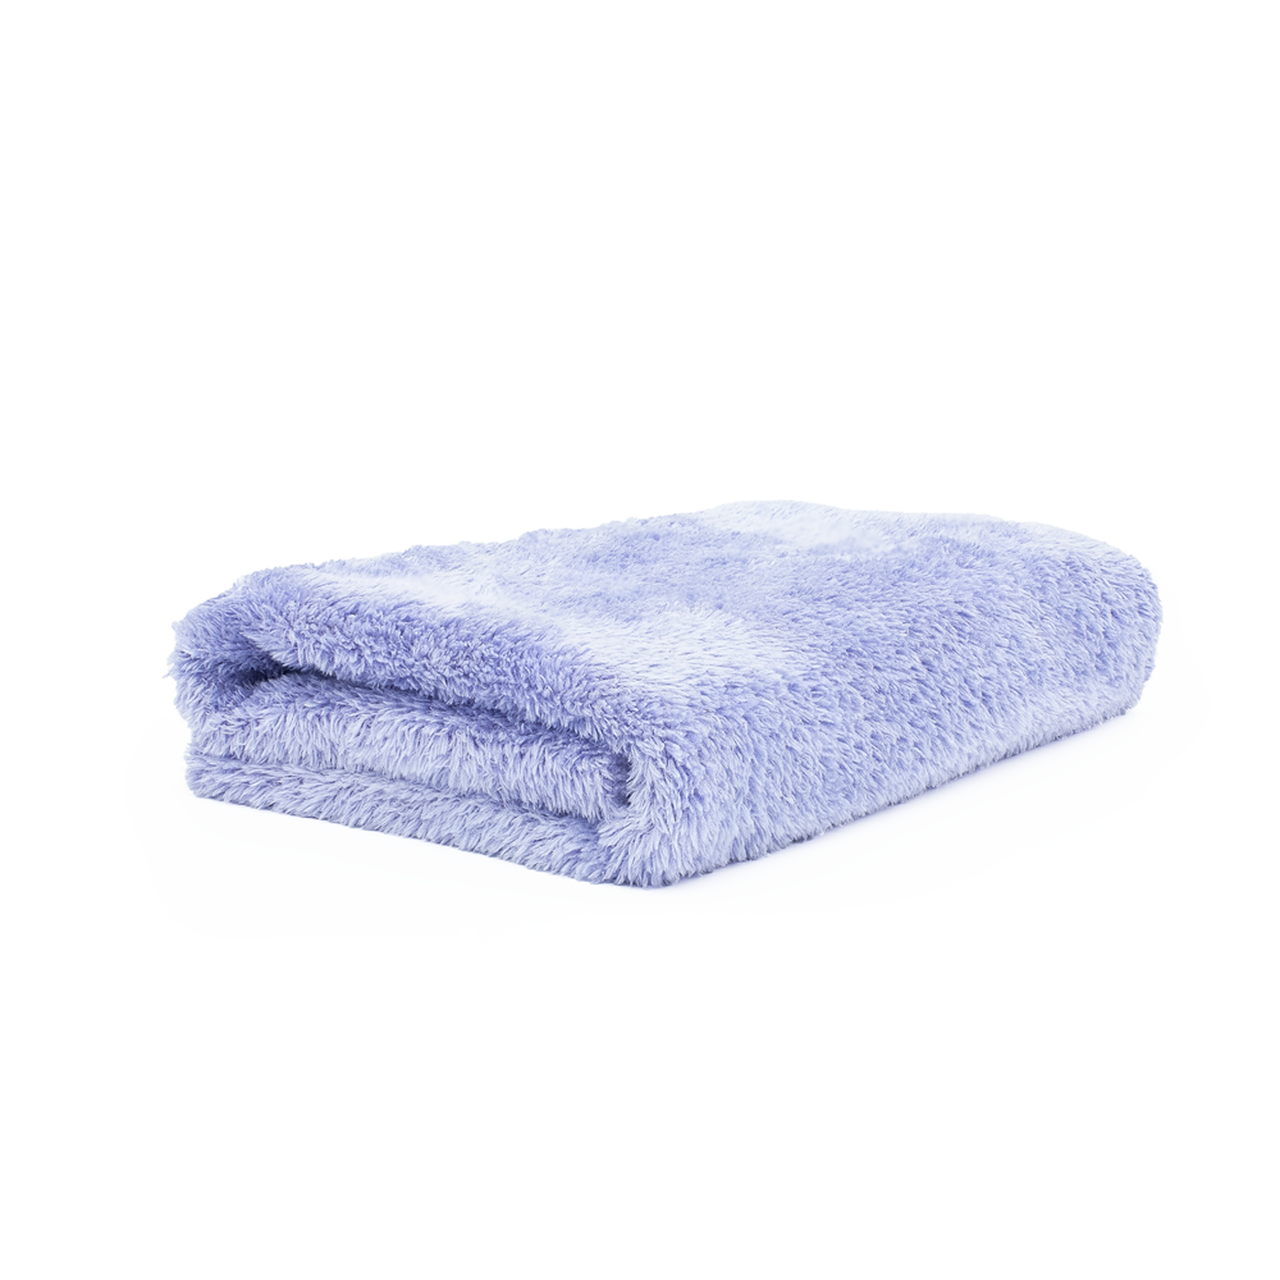 The Rag Company Eagle Edgeless 350 16X16 Plush Microfiber Towel-Lavender